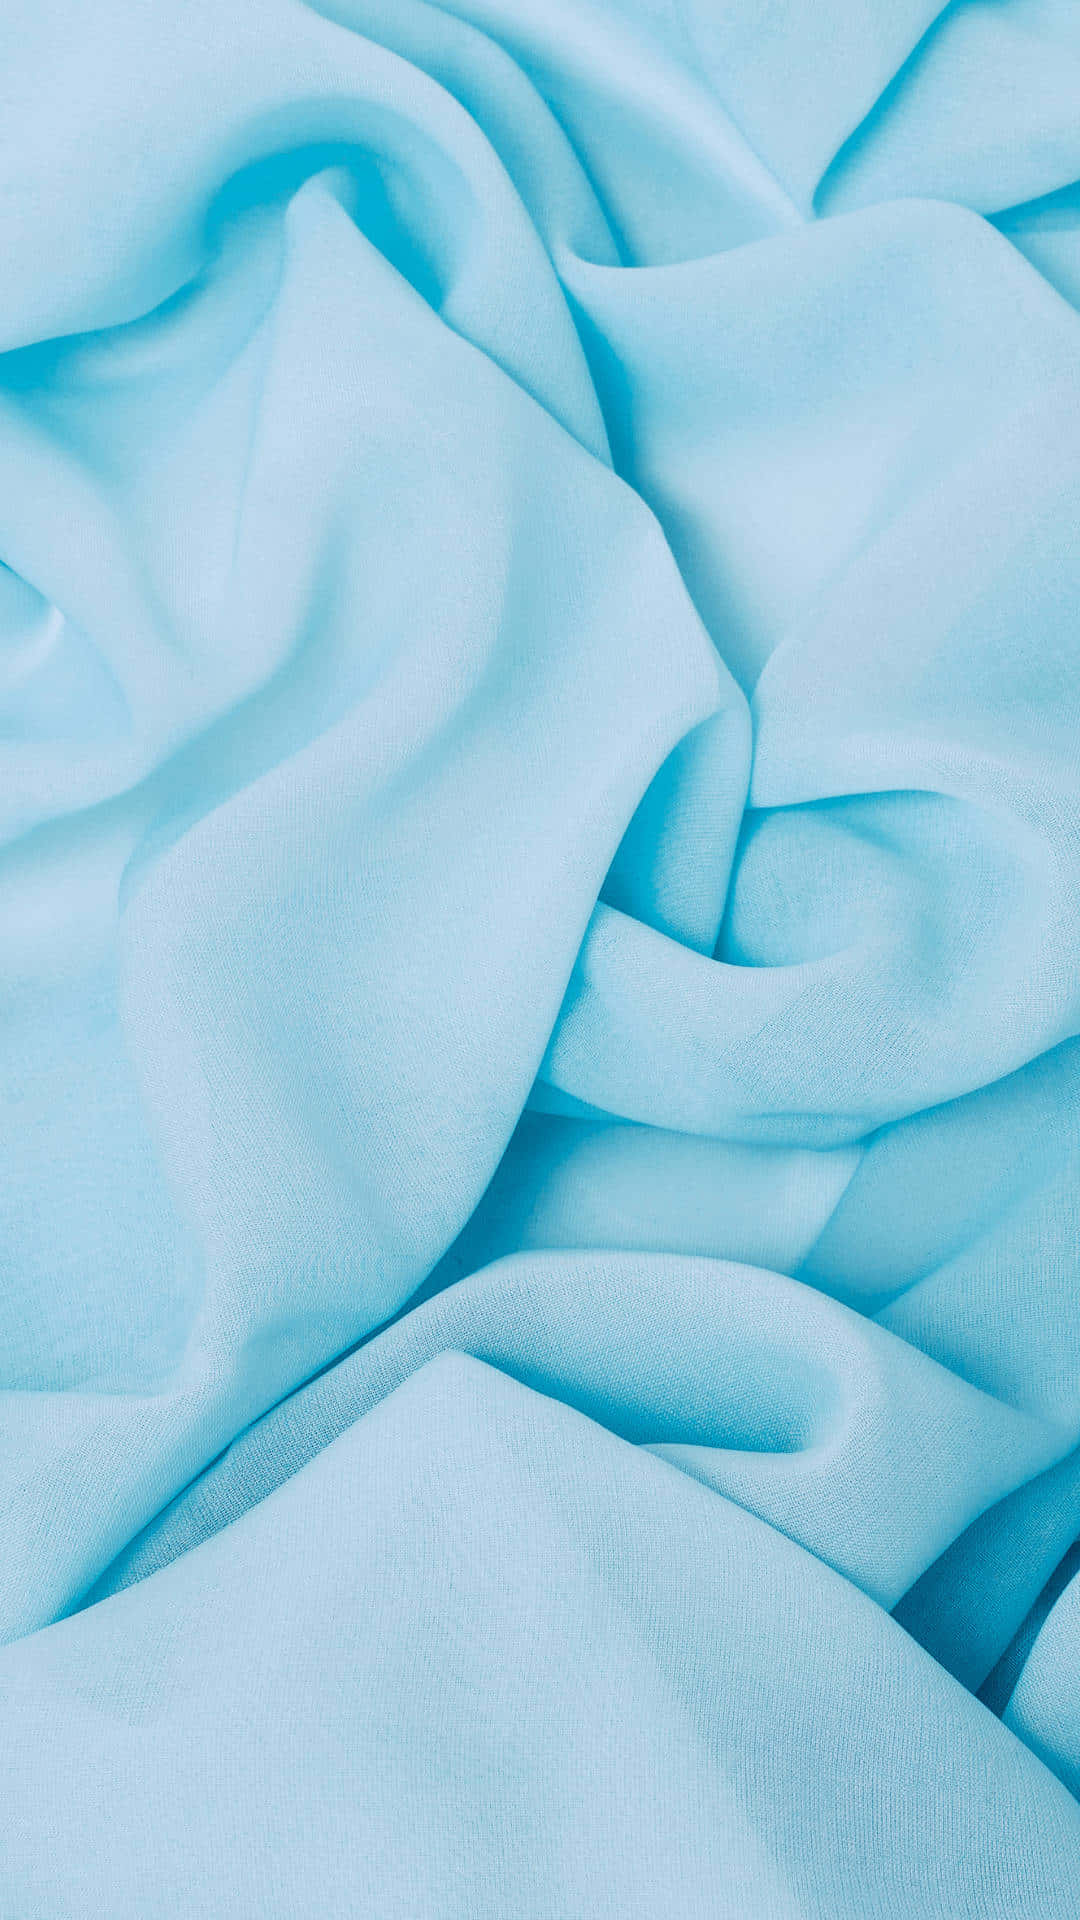 Aesthetic Light Blue Cotton Fabric Background